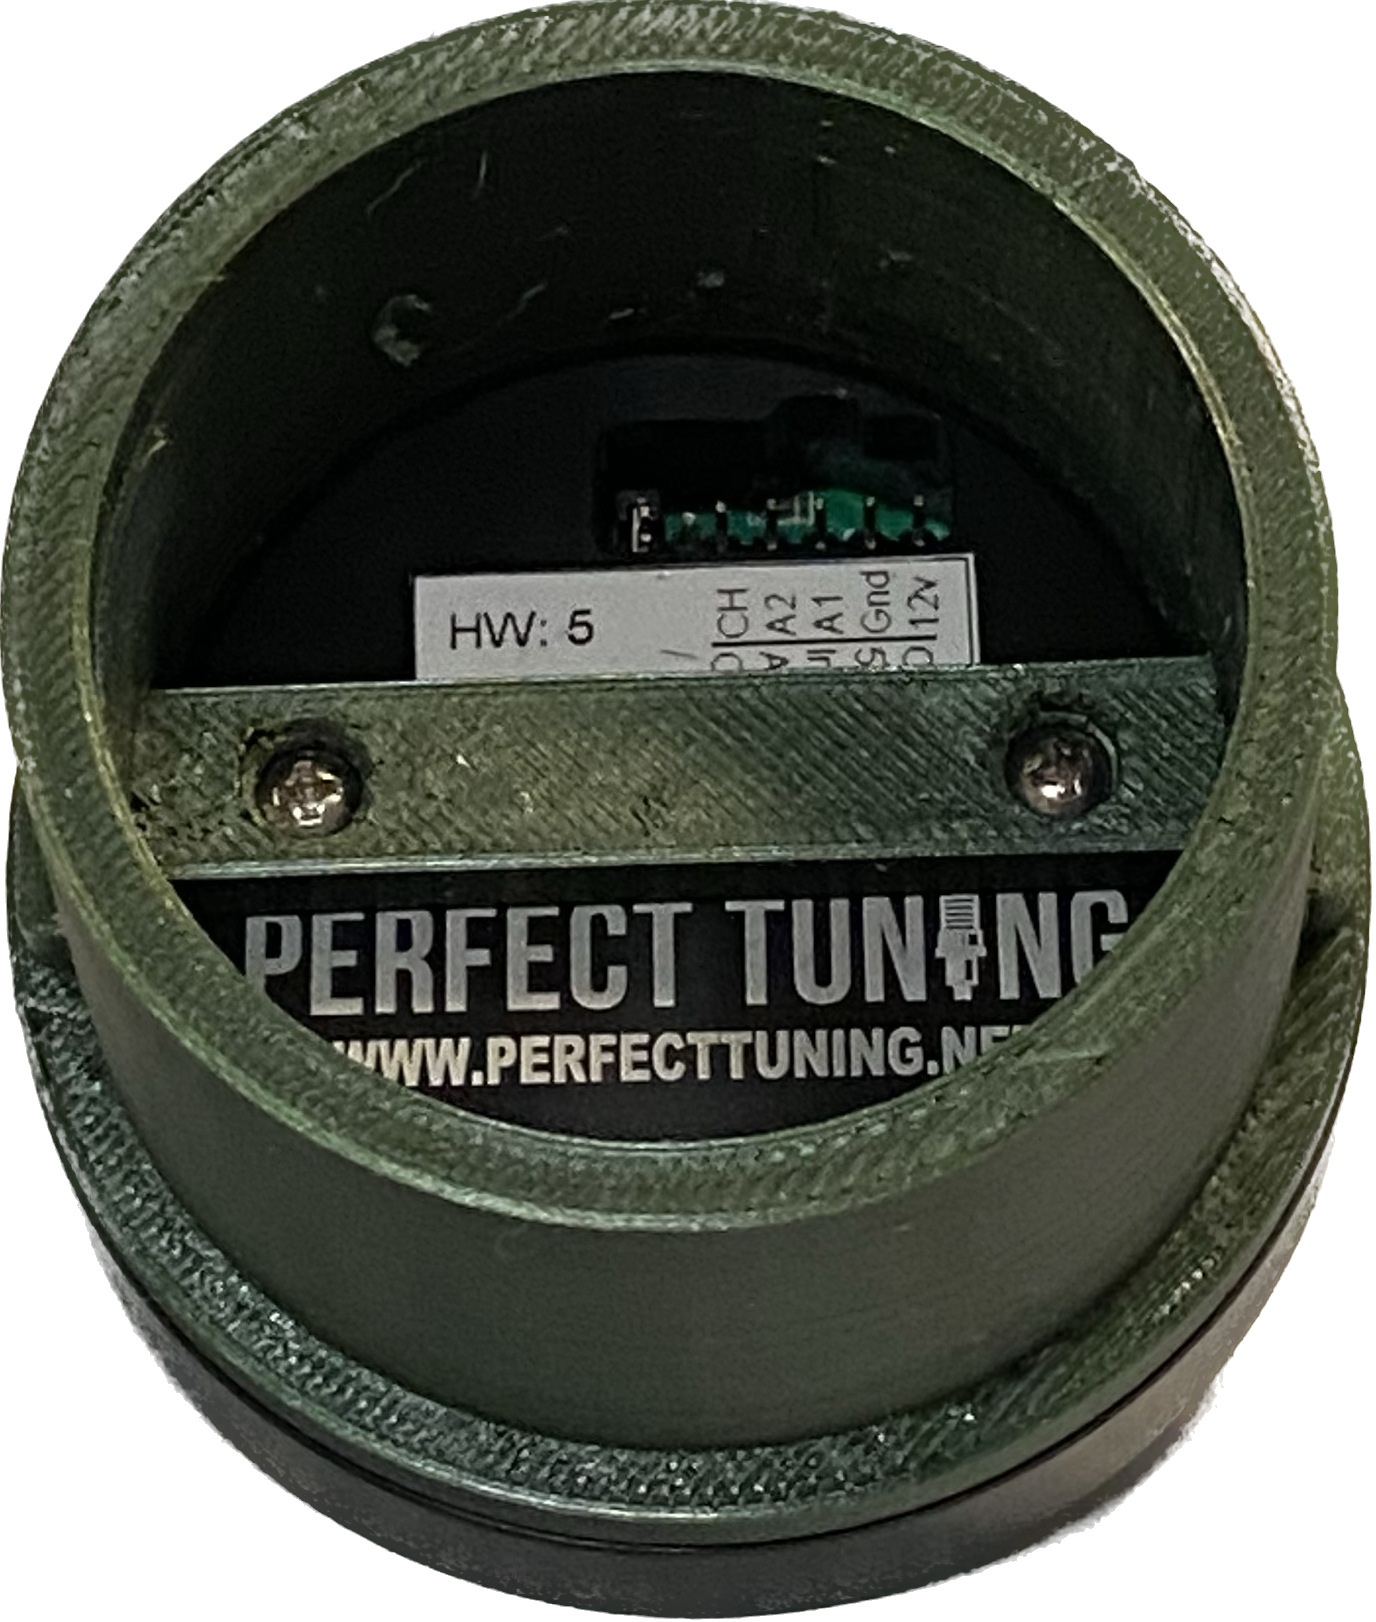 Gauge Adapter for NA/NB Miata HVAC Vents